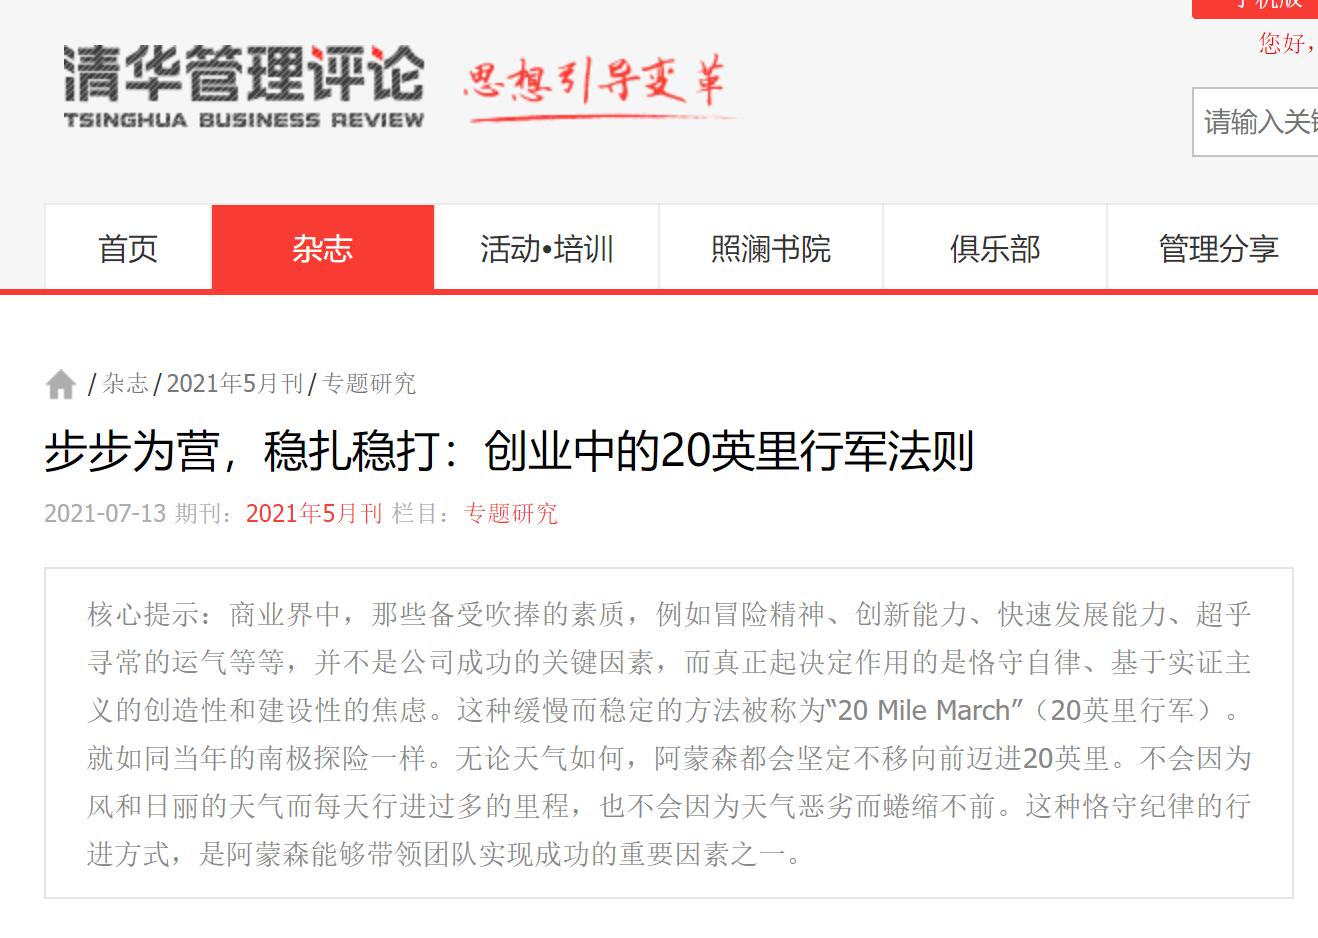 Tsinghua Business Review: Management 20 Mile March!